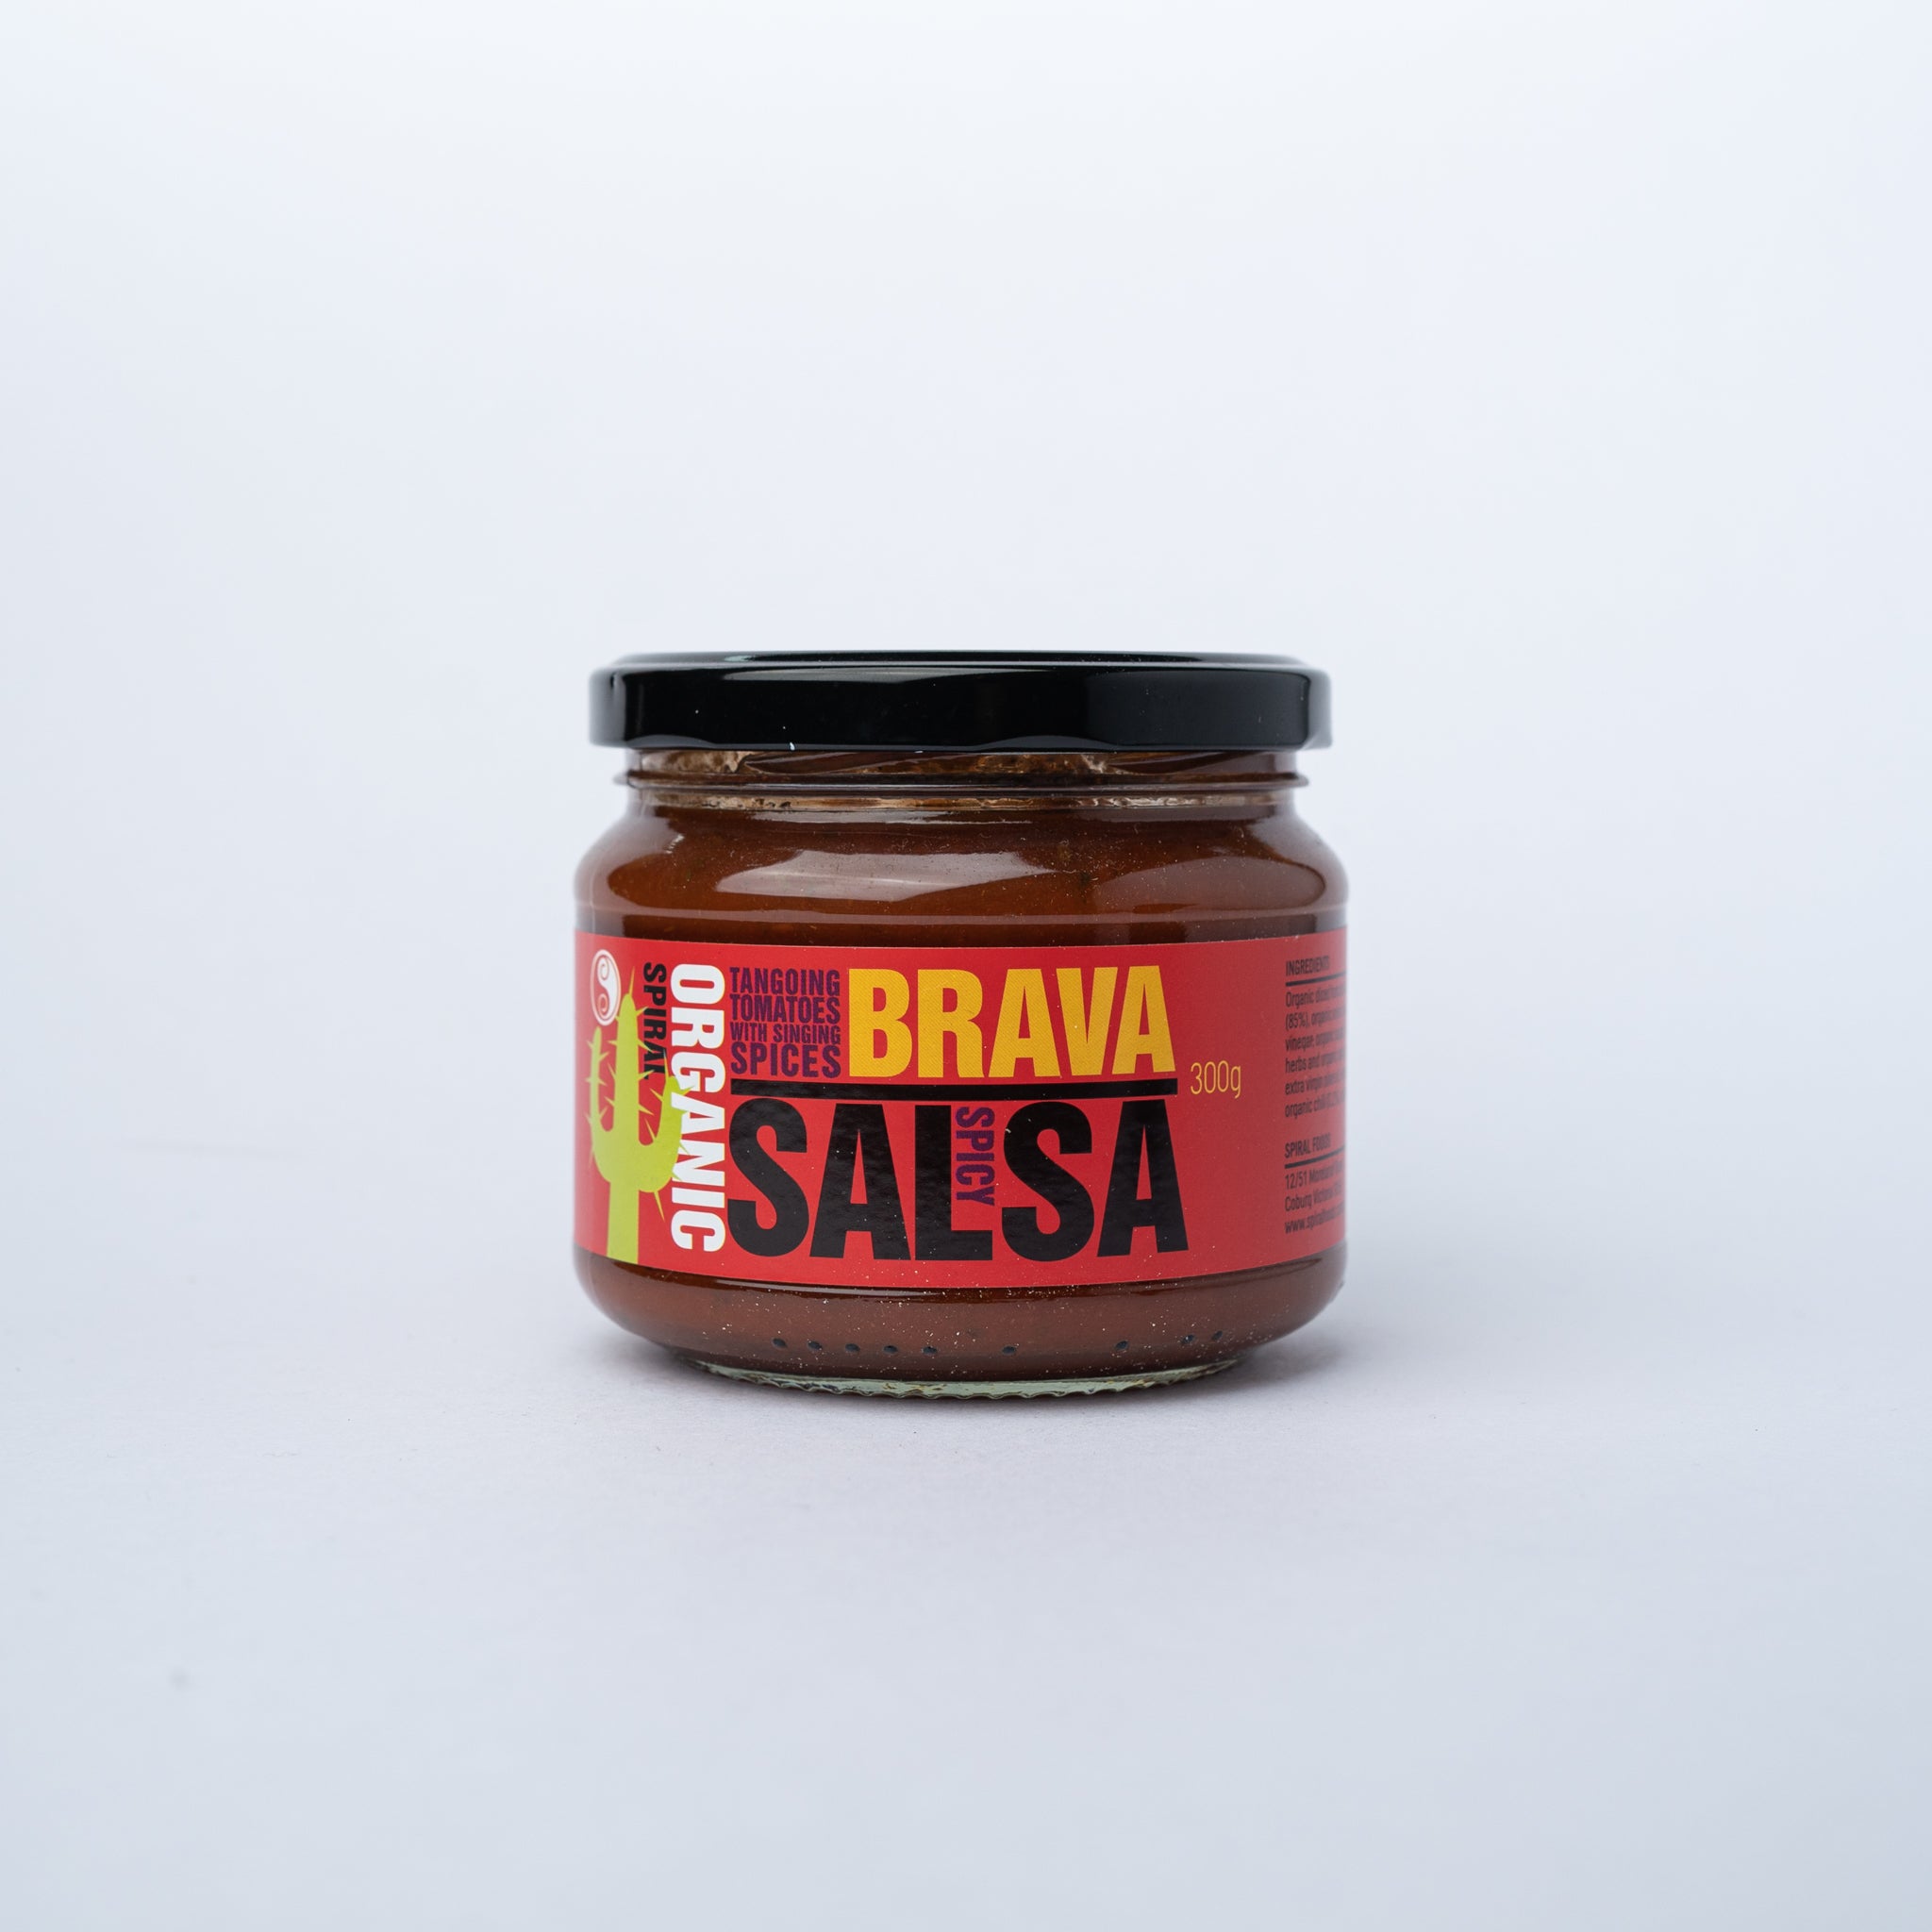 A squat glass jar of Spiral Organic Brava Salsa 300g.